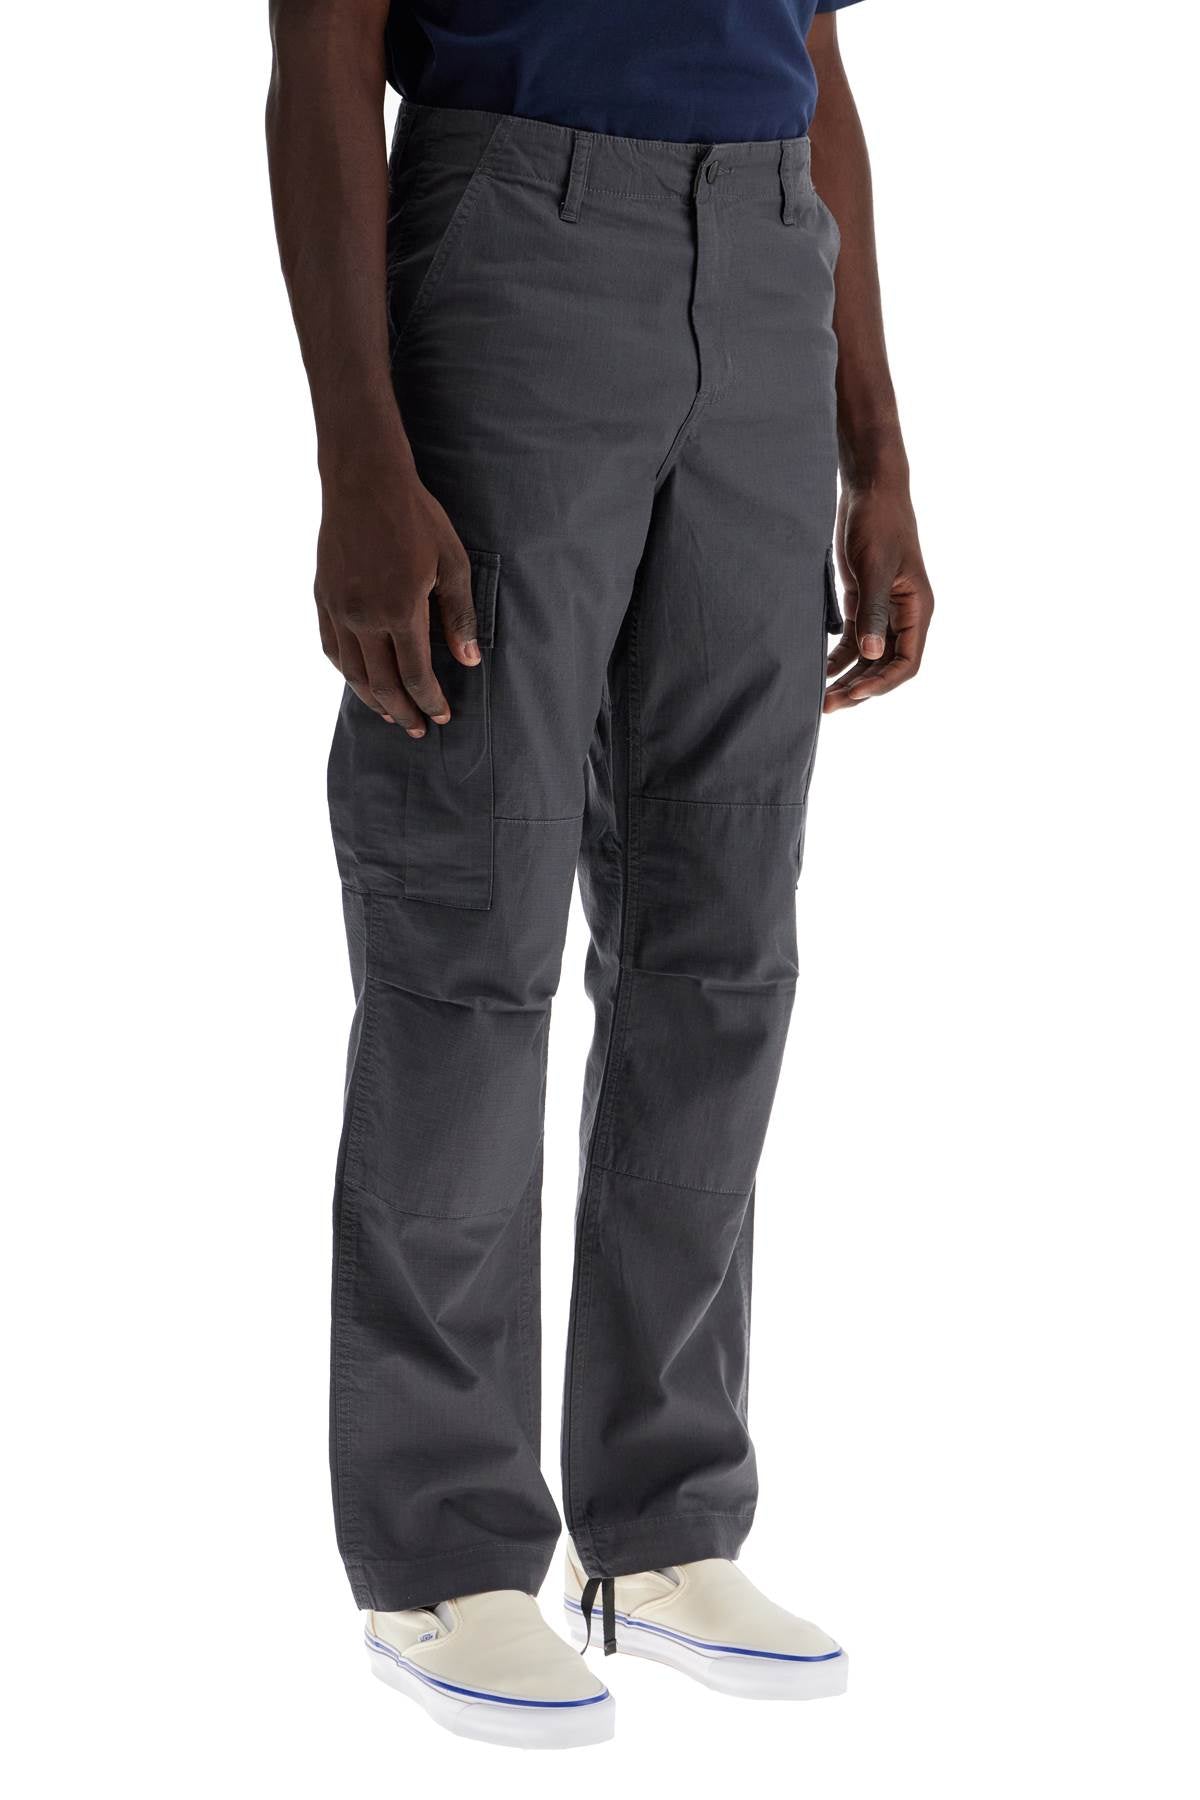 Carhartt Wip regular cotton ripstop cargo pants - Grey